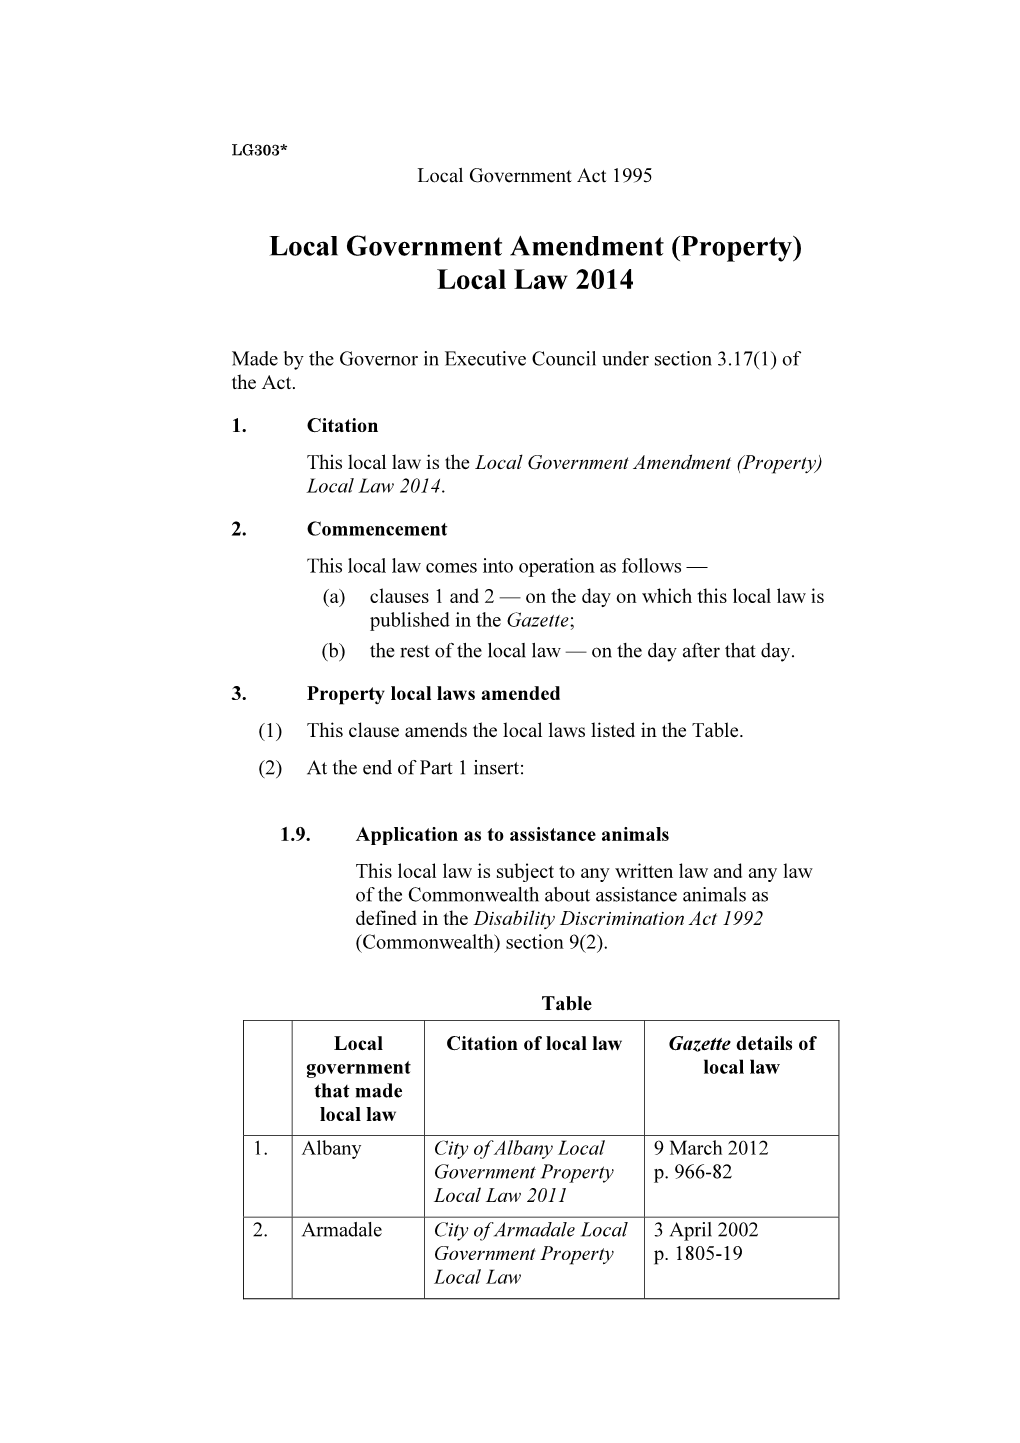 Local Government Amendment (Property) Local Law 2014